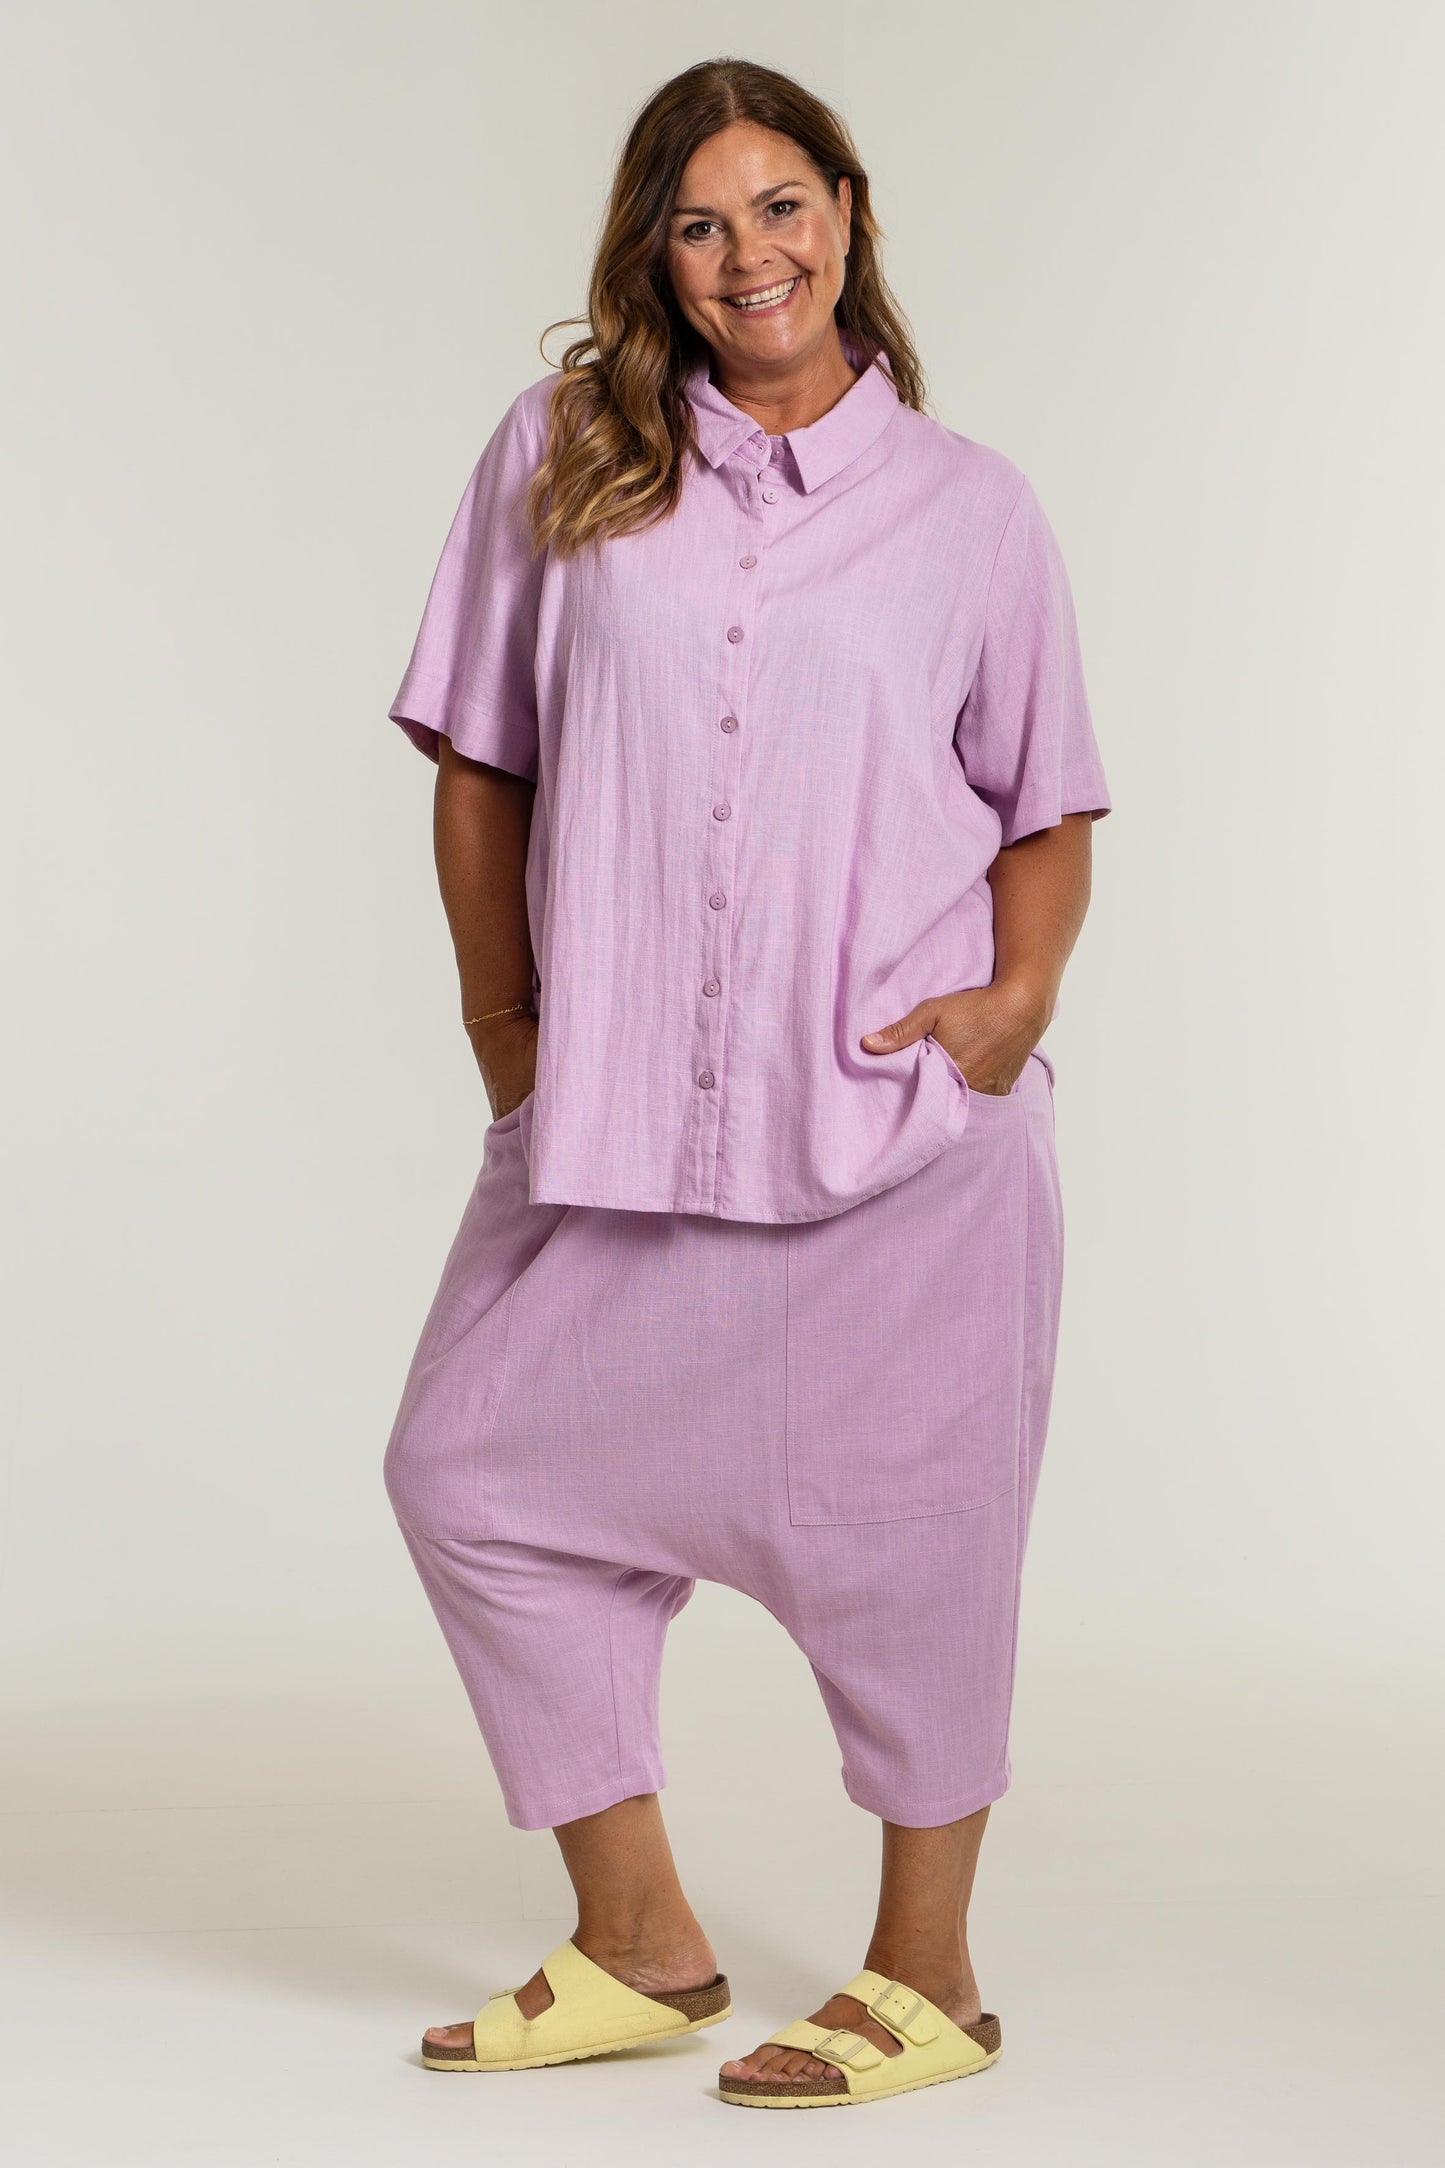 Gozzip Woman Pian Short sleeve Shirt - FLERE FARVER Shirt Pink Lavendel